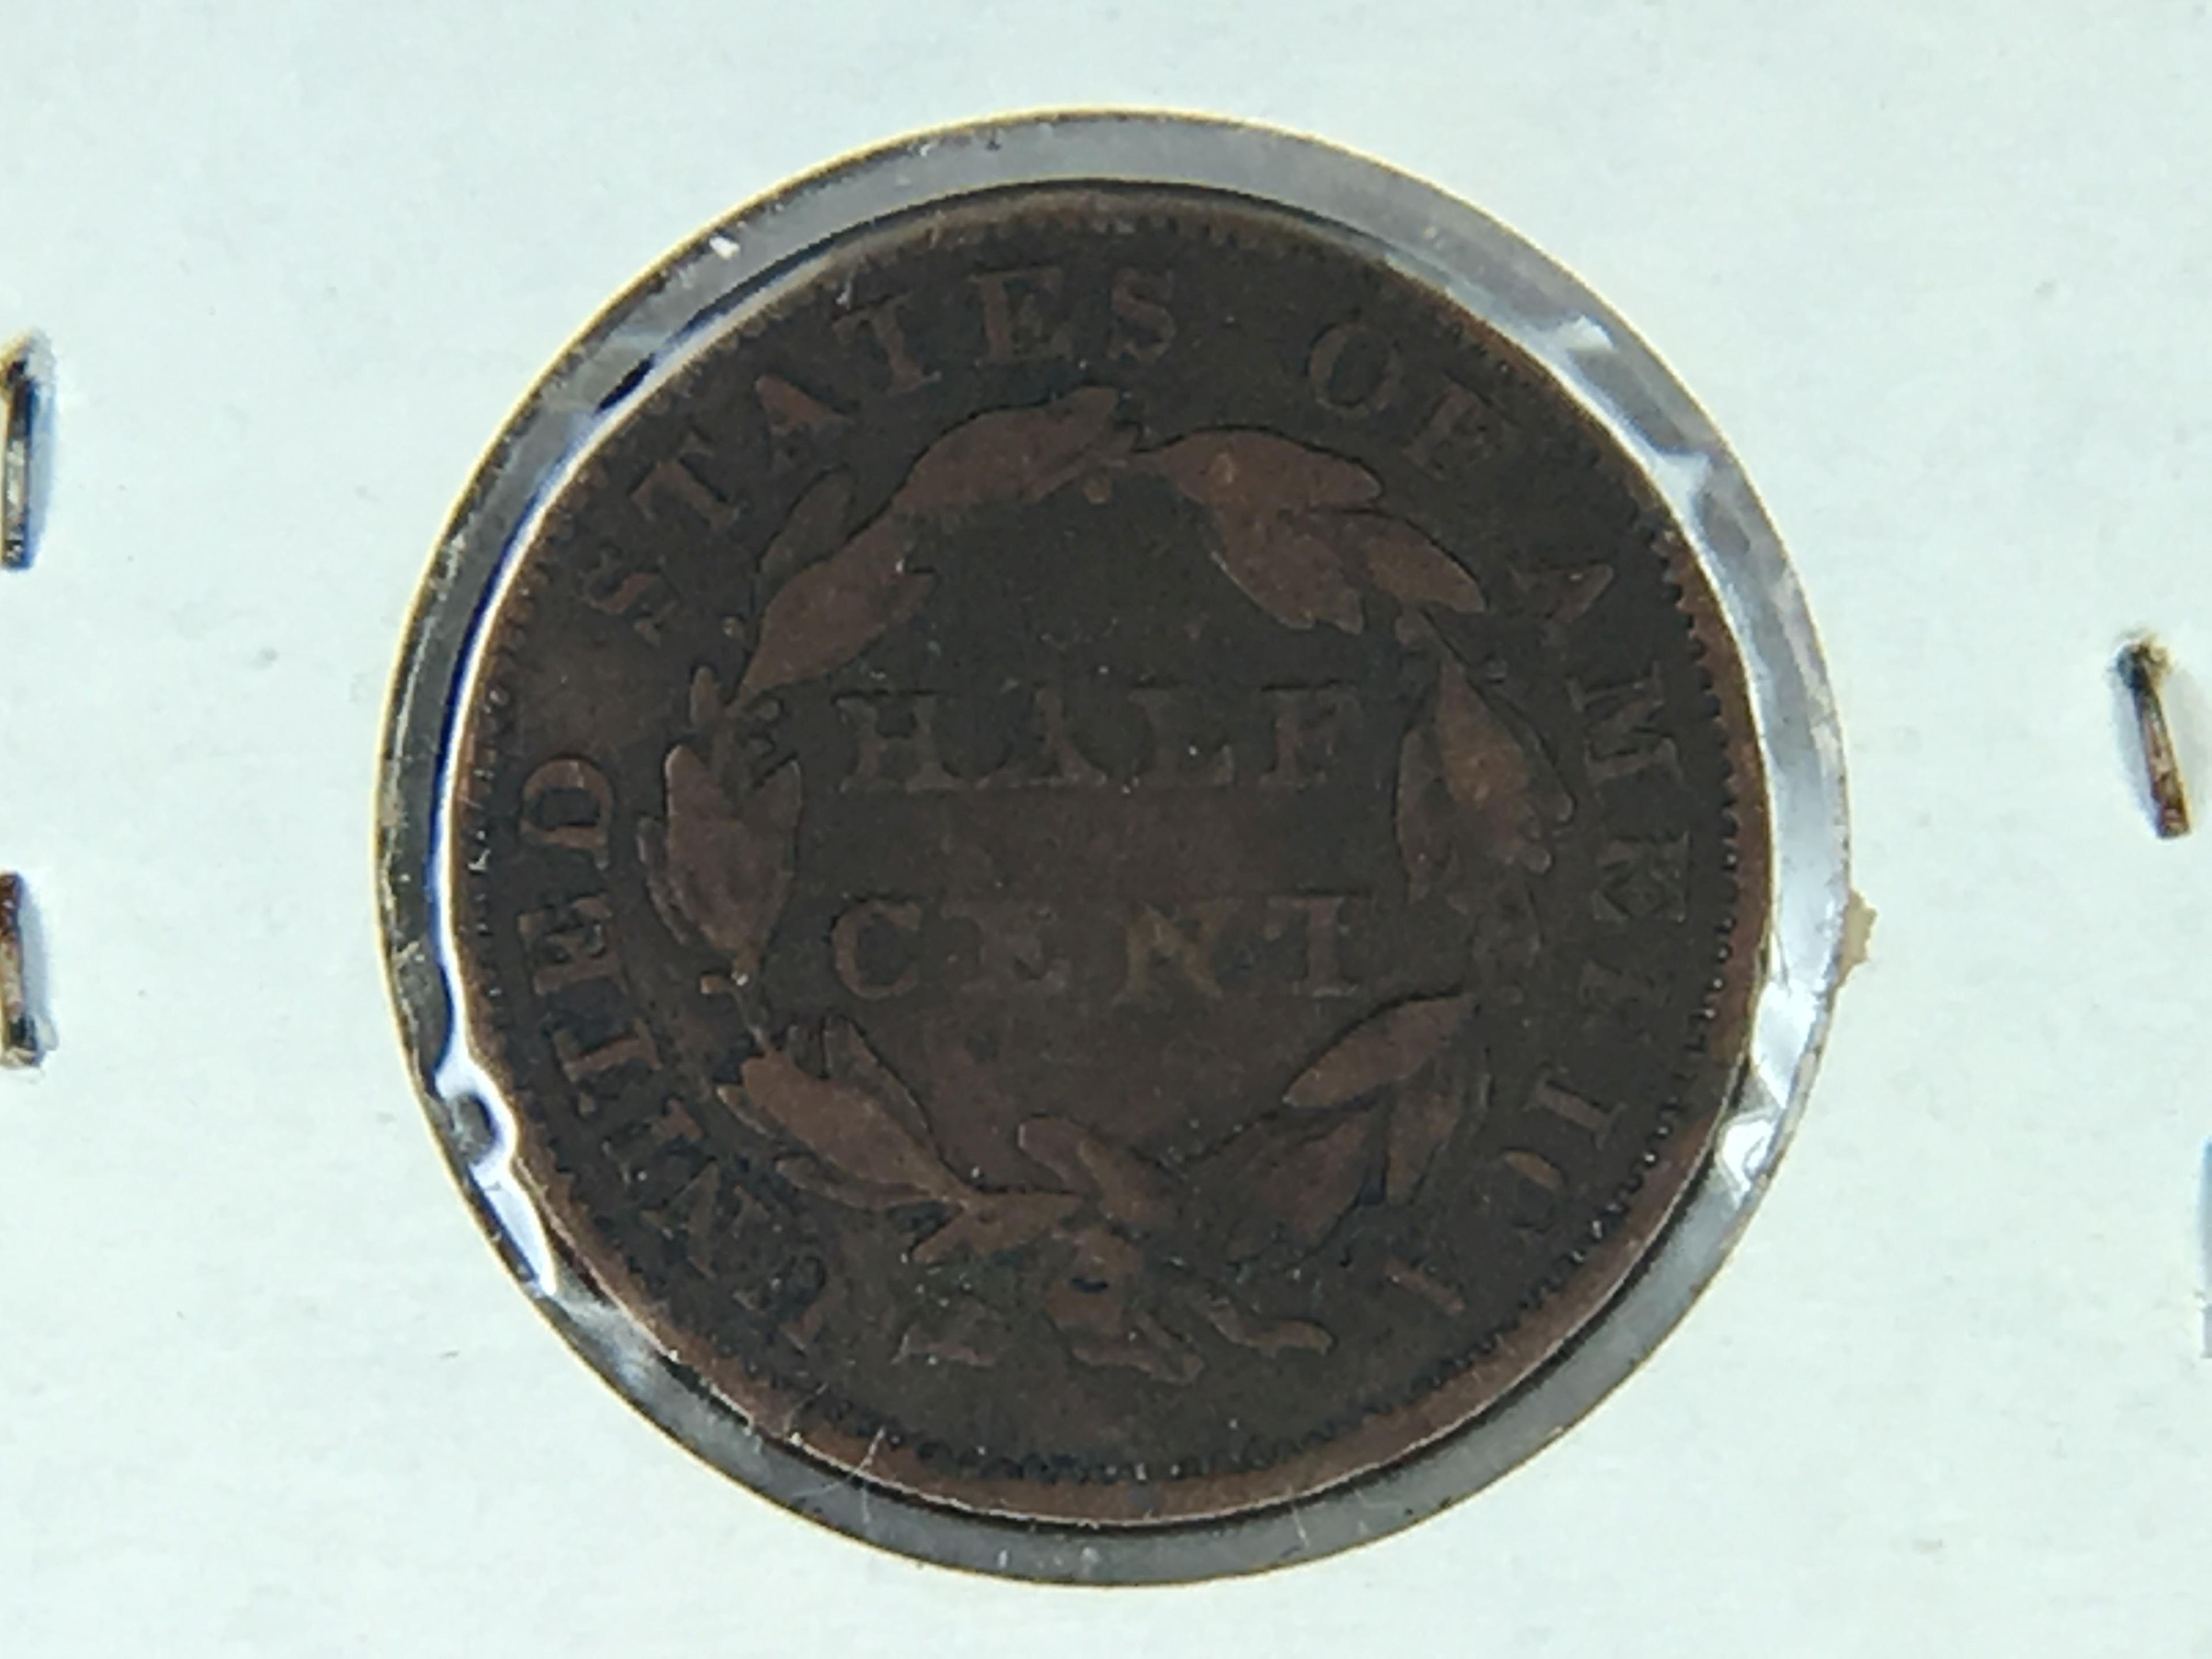 1834 1/2 Cent